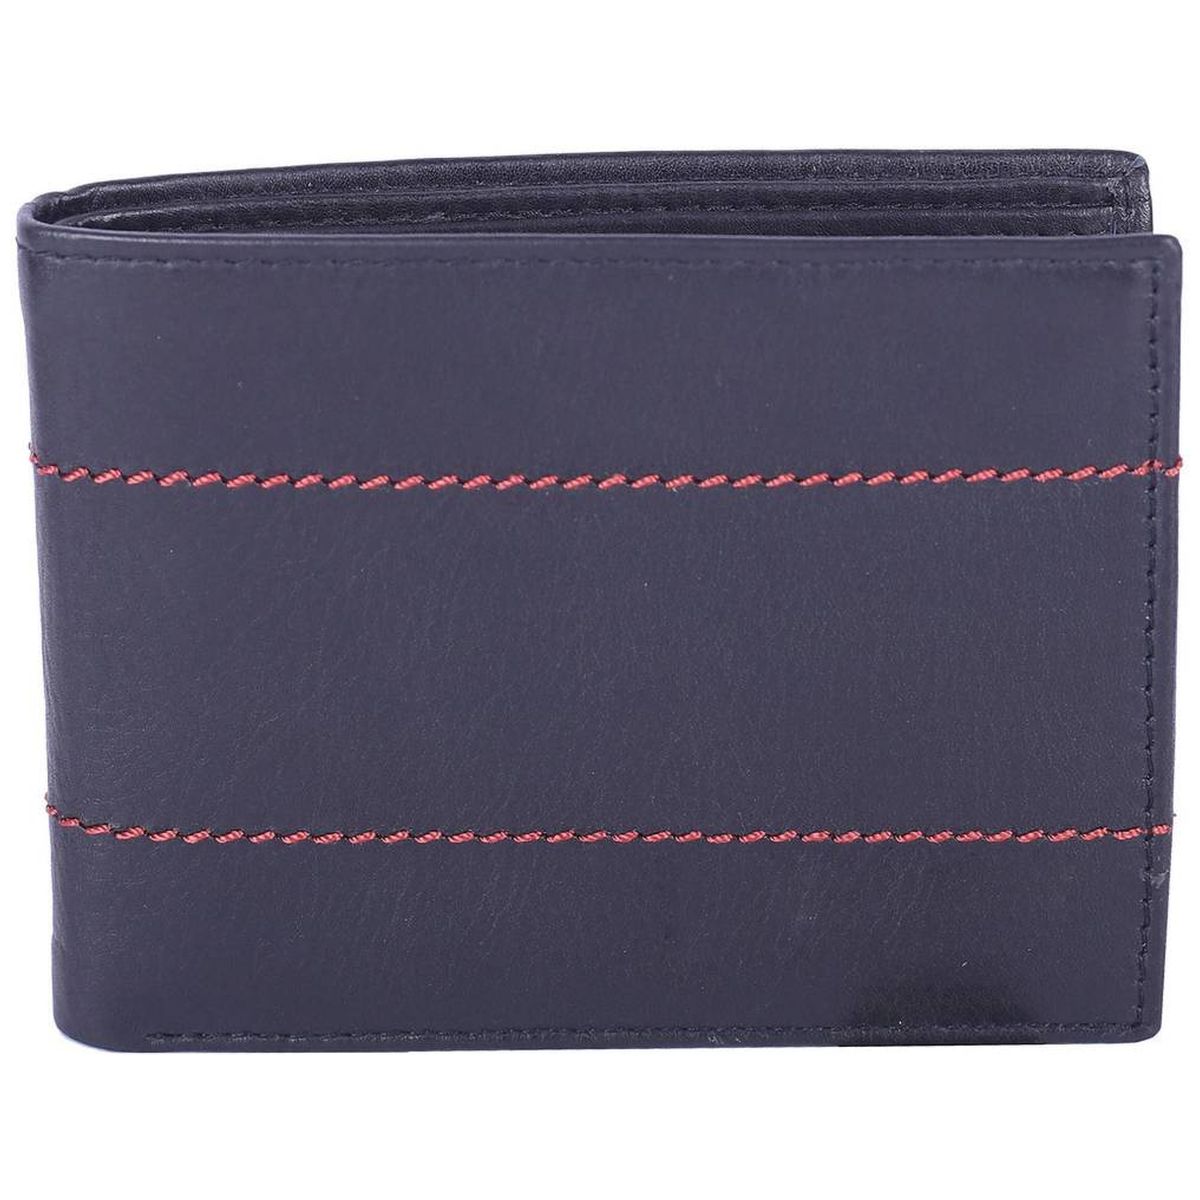 Craftwood Men Genuine Leather 10 Slots Wallet, DI934378, Black